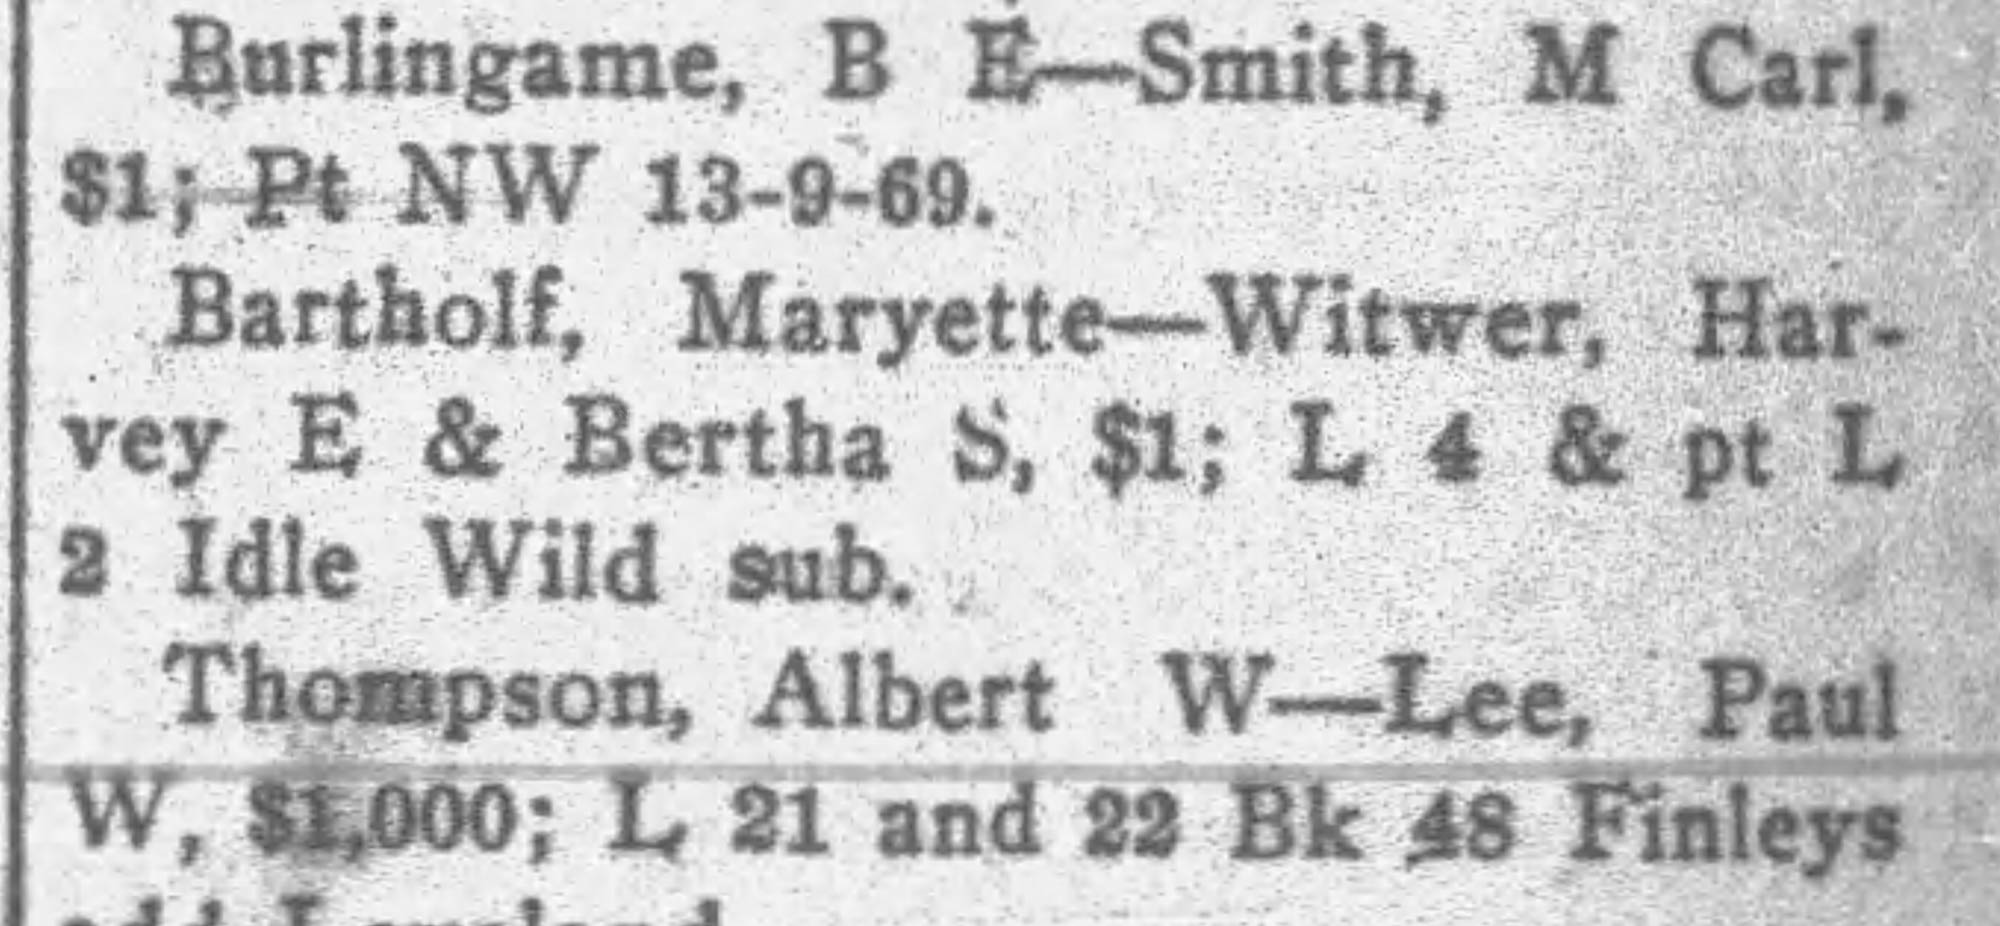 Idlewild Lodge - idlewildlodge.github.io - 1911-10-12 - The Fort Collins Express - Mary Bartholf Sells Idlewild Lot 4 and 2 to Harvey Witwer